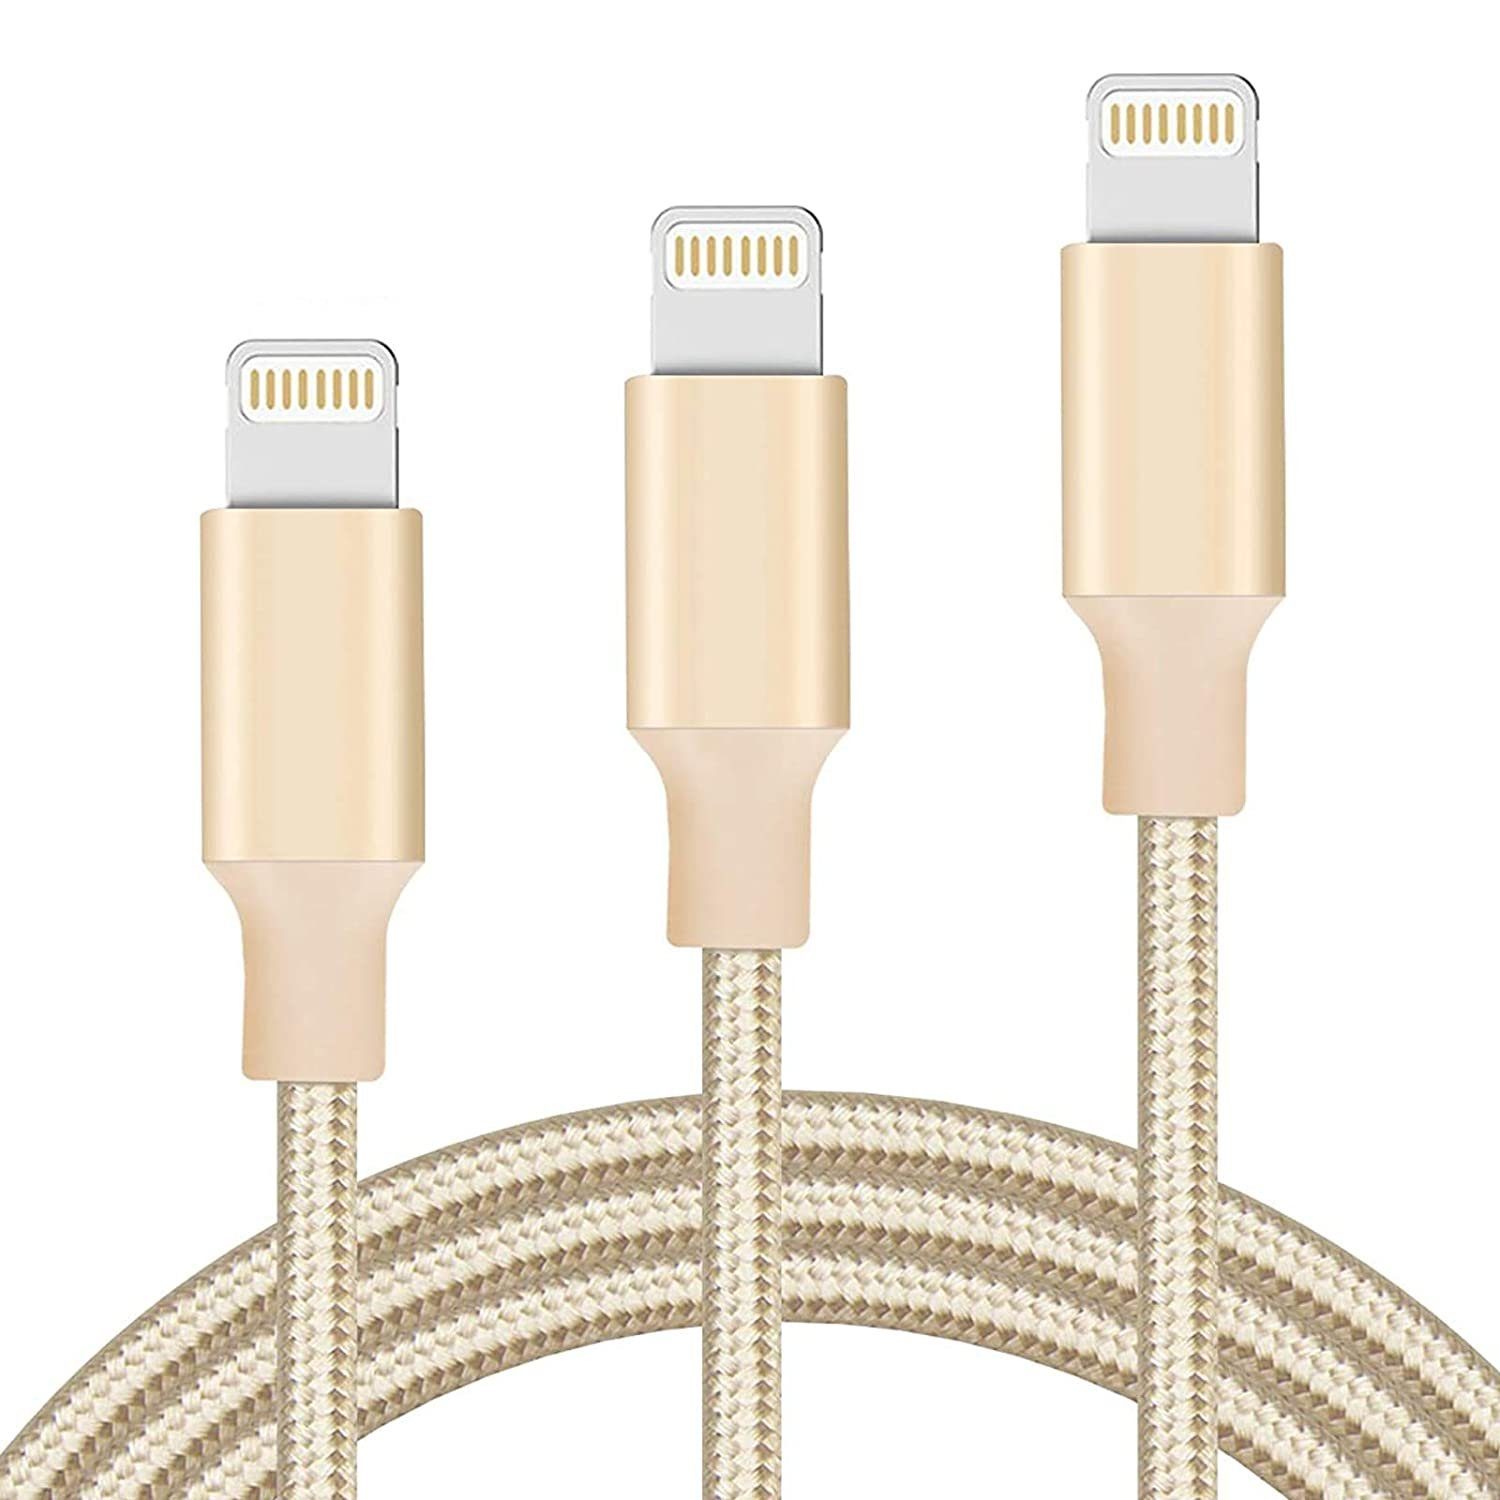 8 Datenkabel Stromkabel 1m farbig Nylon USB Ladekabel für iPhone 5/ 6 7 6s 